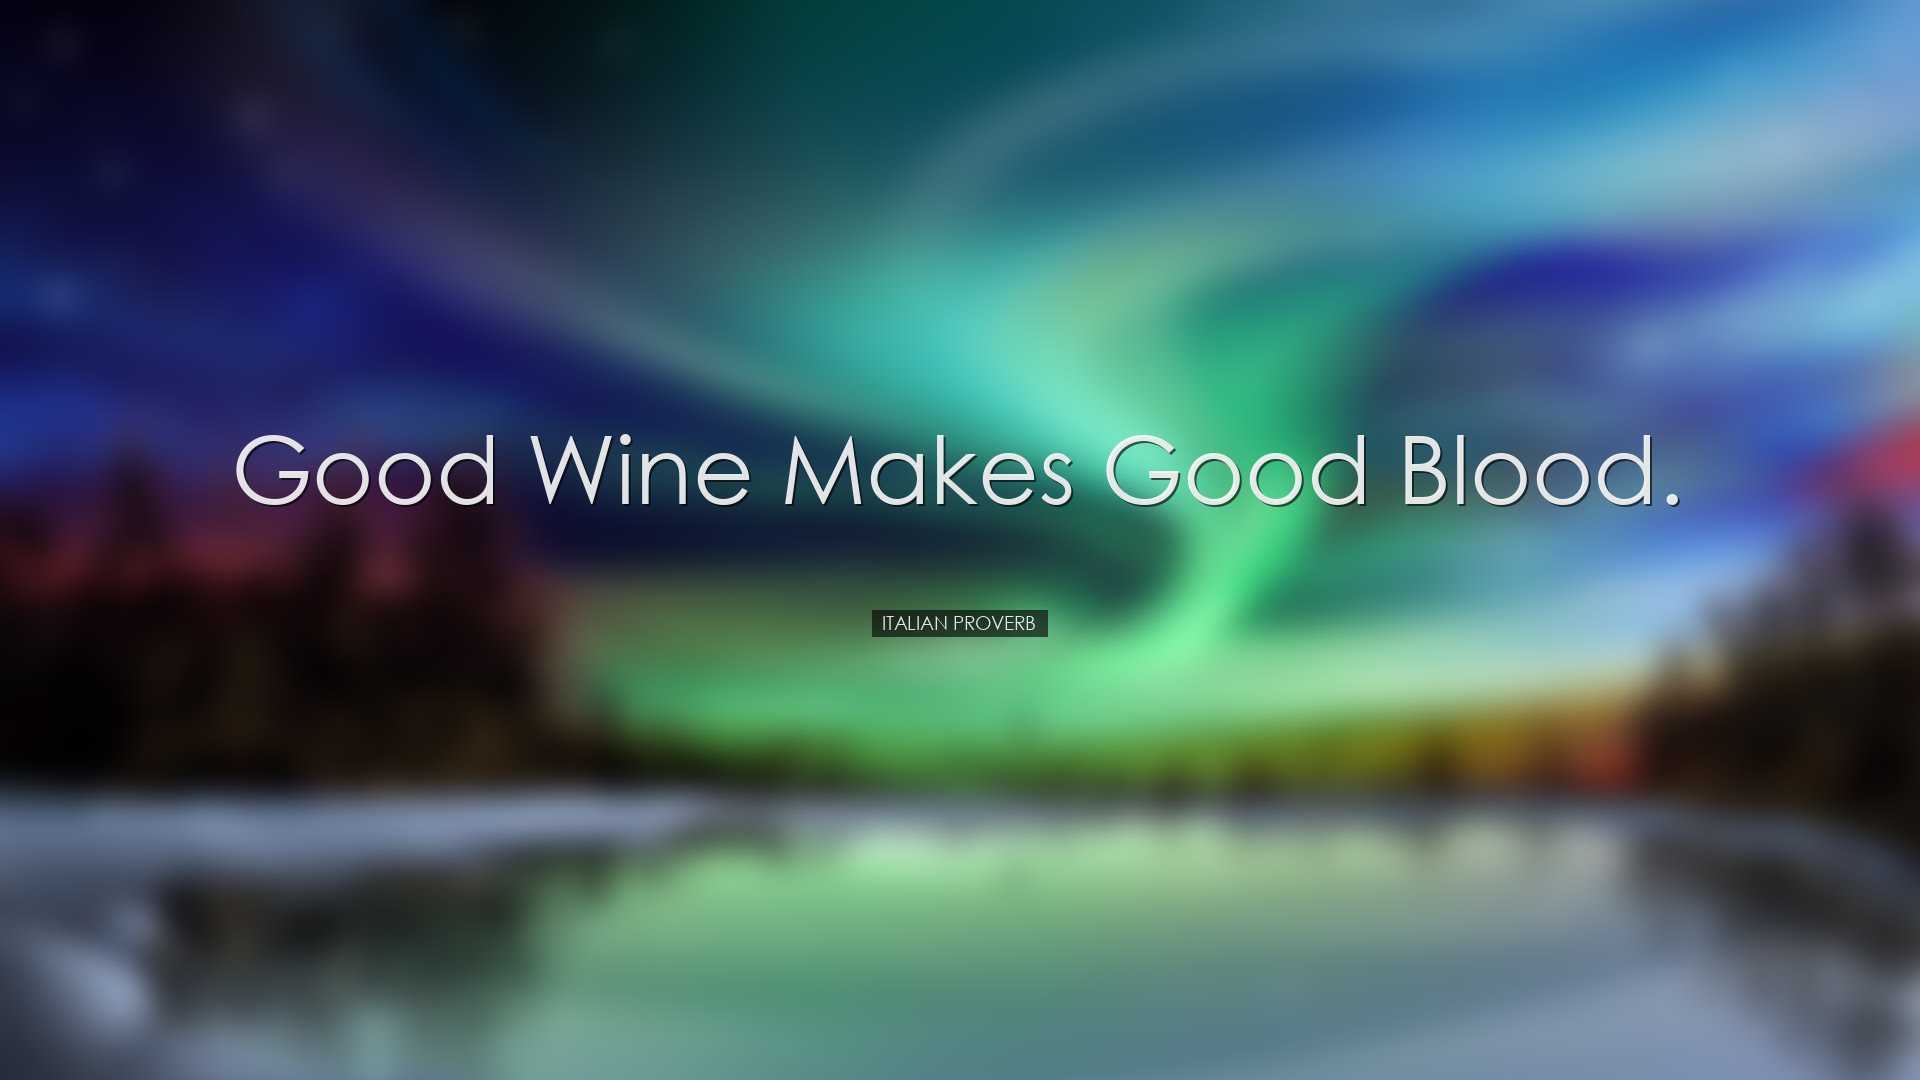 Good wine makes good blood. - Italian proverb